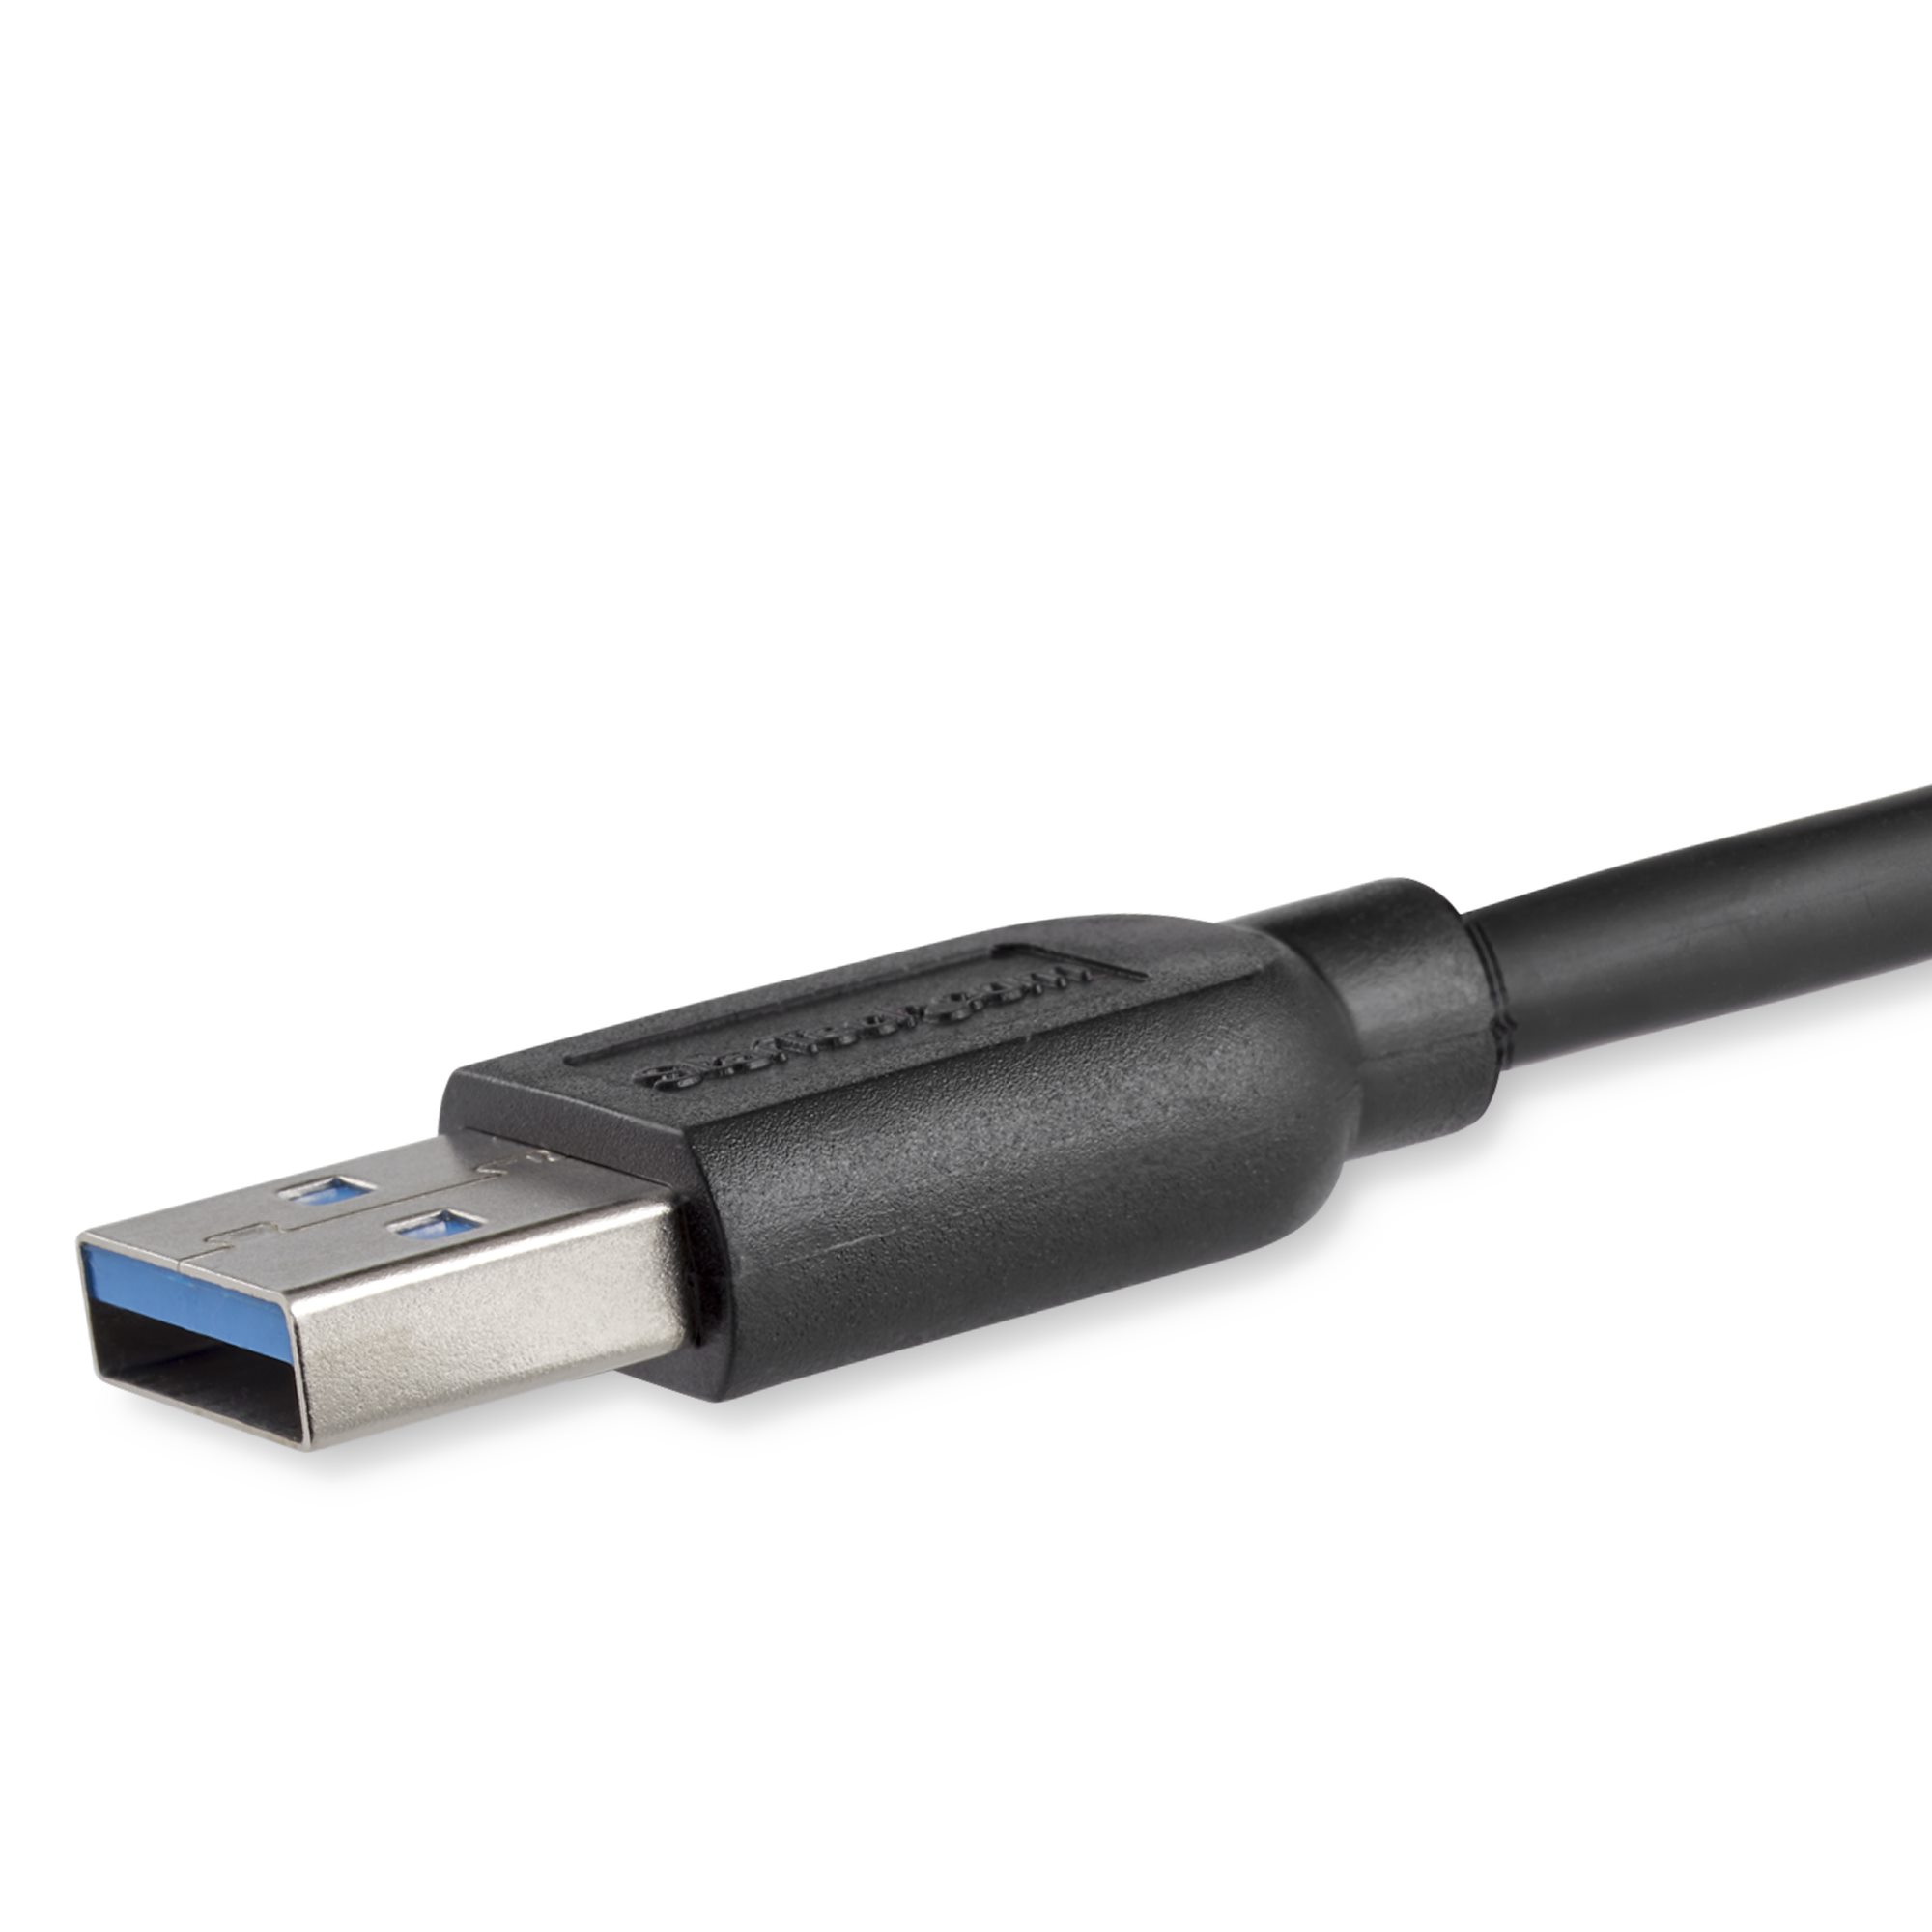 2m Slim USB 3.0 Micro B Cable - USB 3.0 Cables | StarTech.com